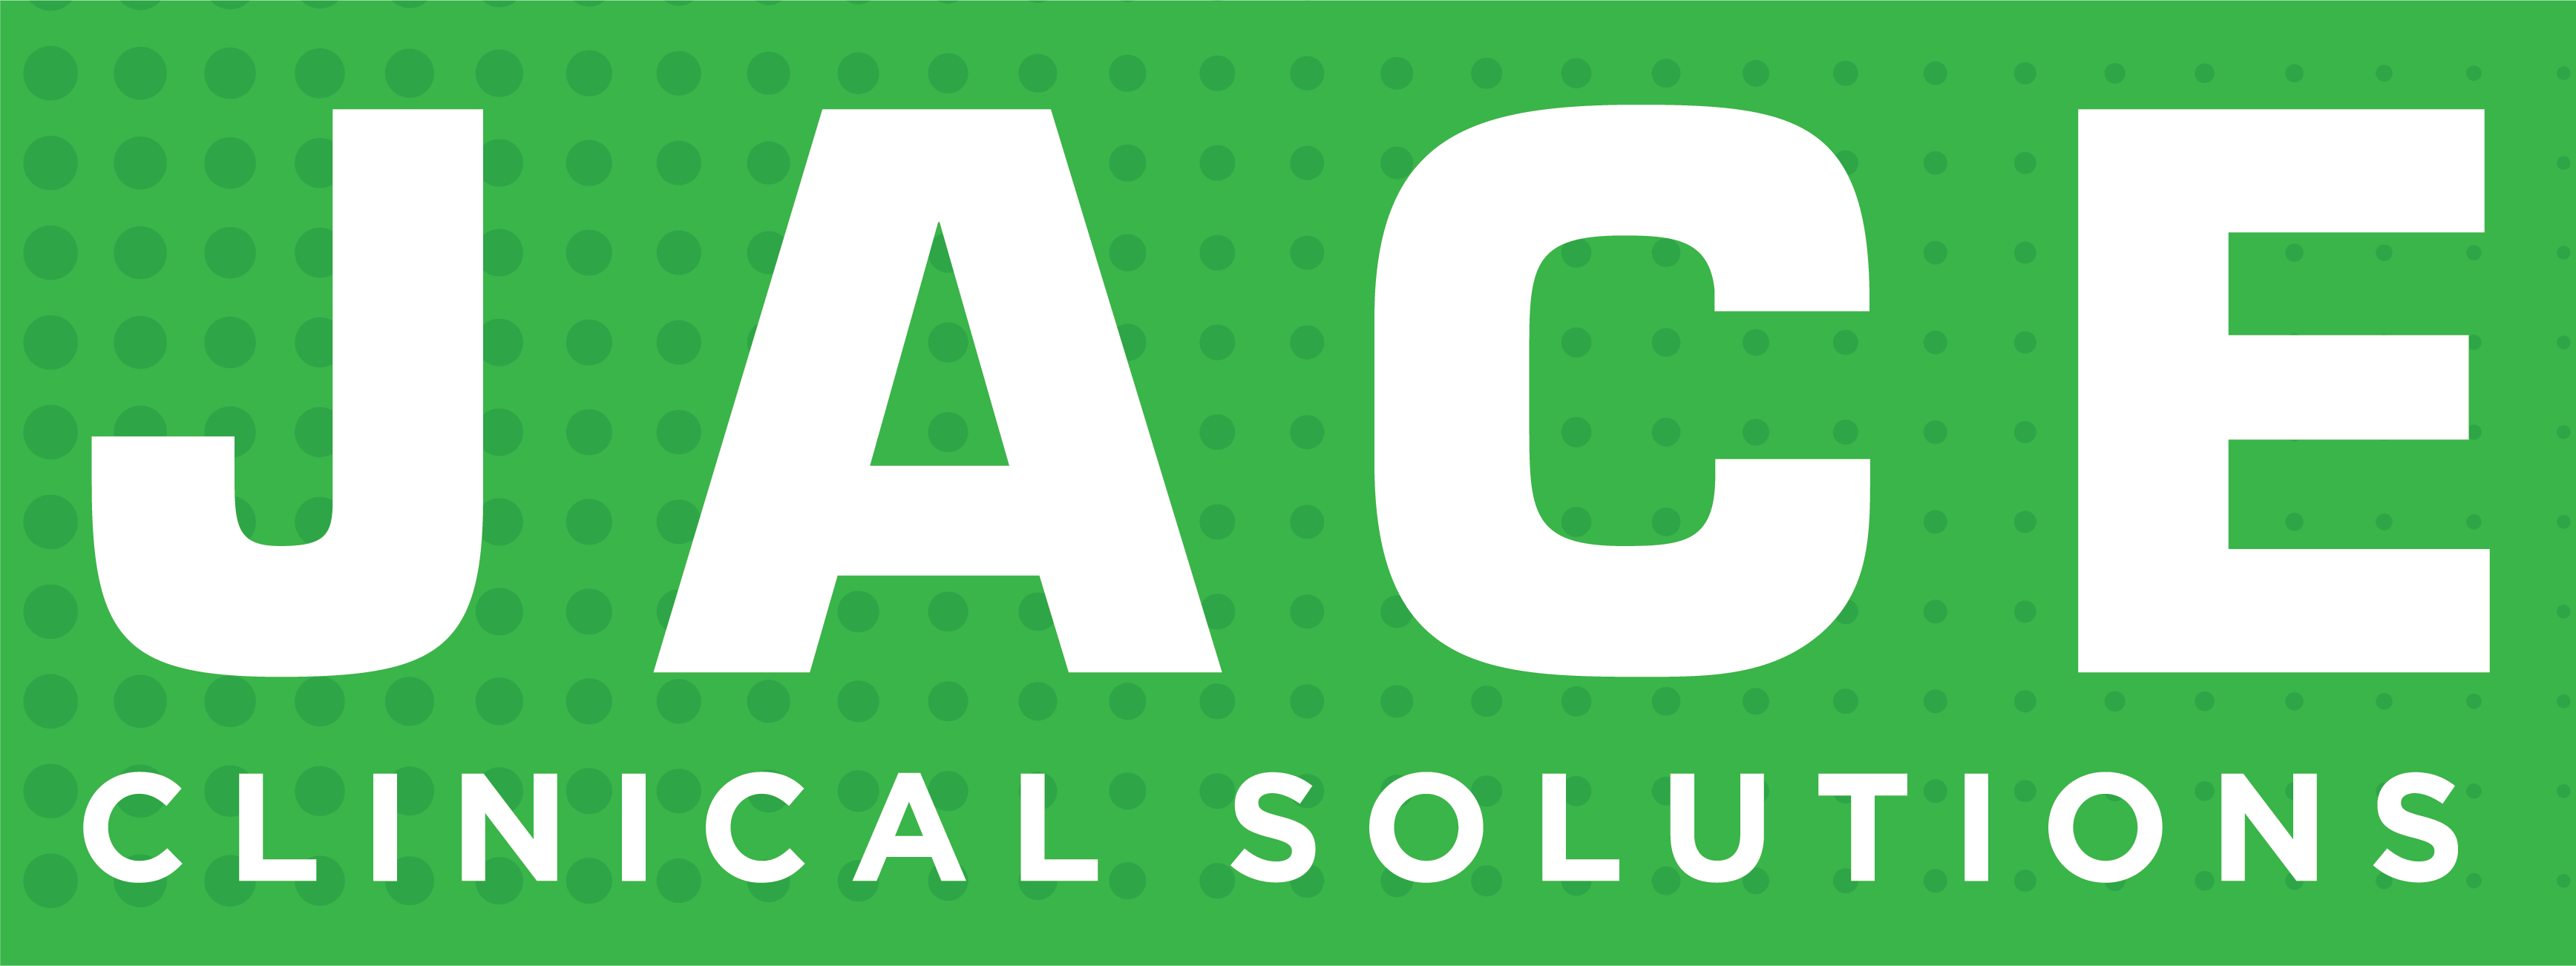 Jace White Logo Green Background